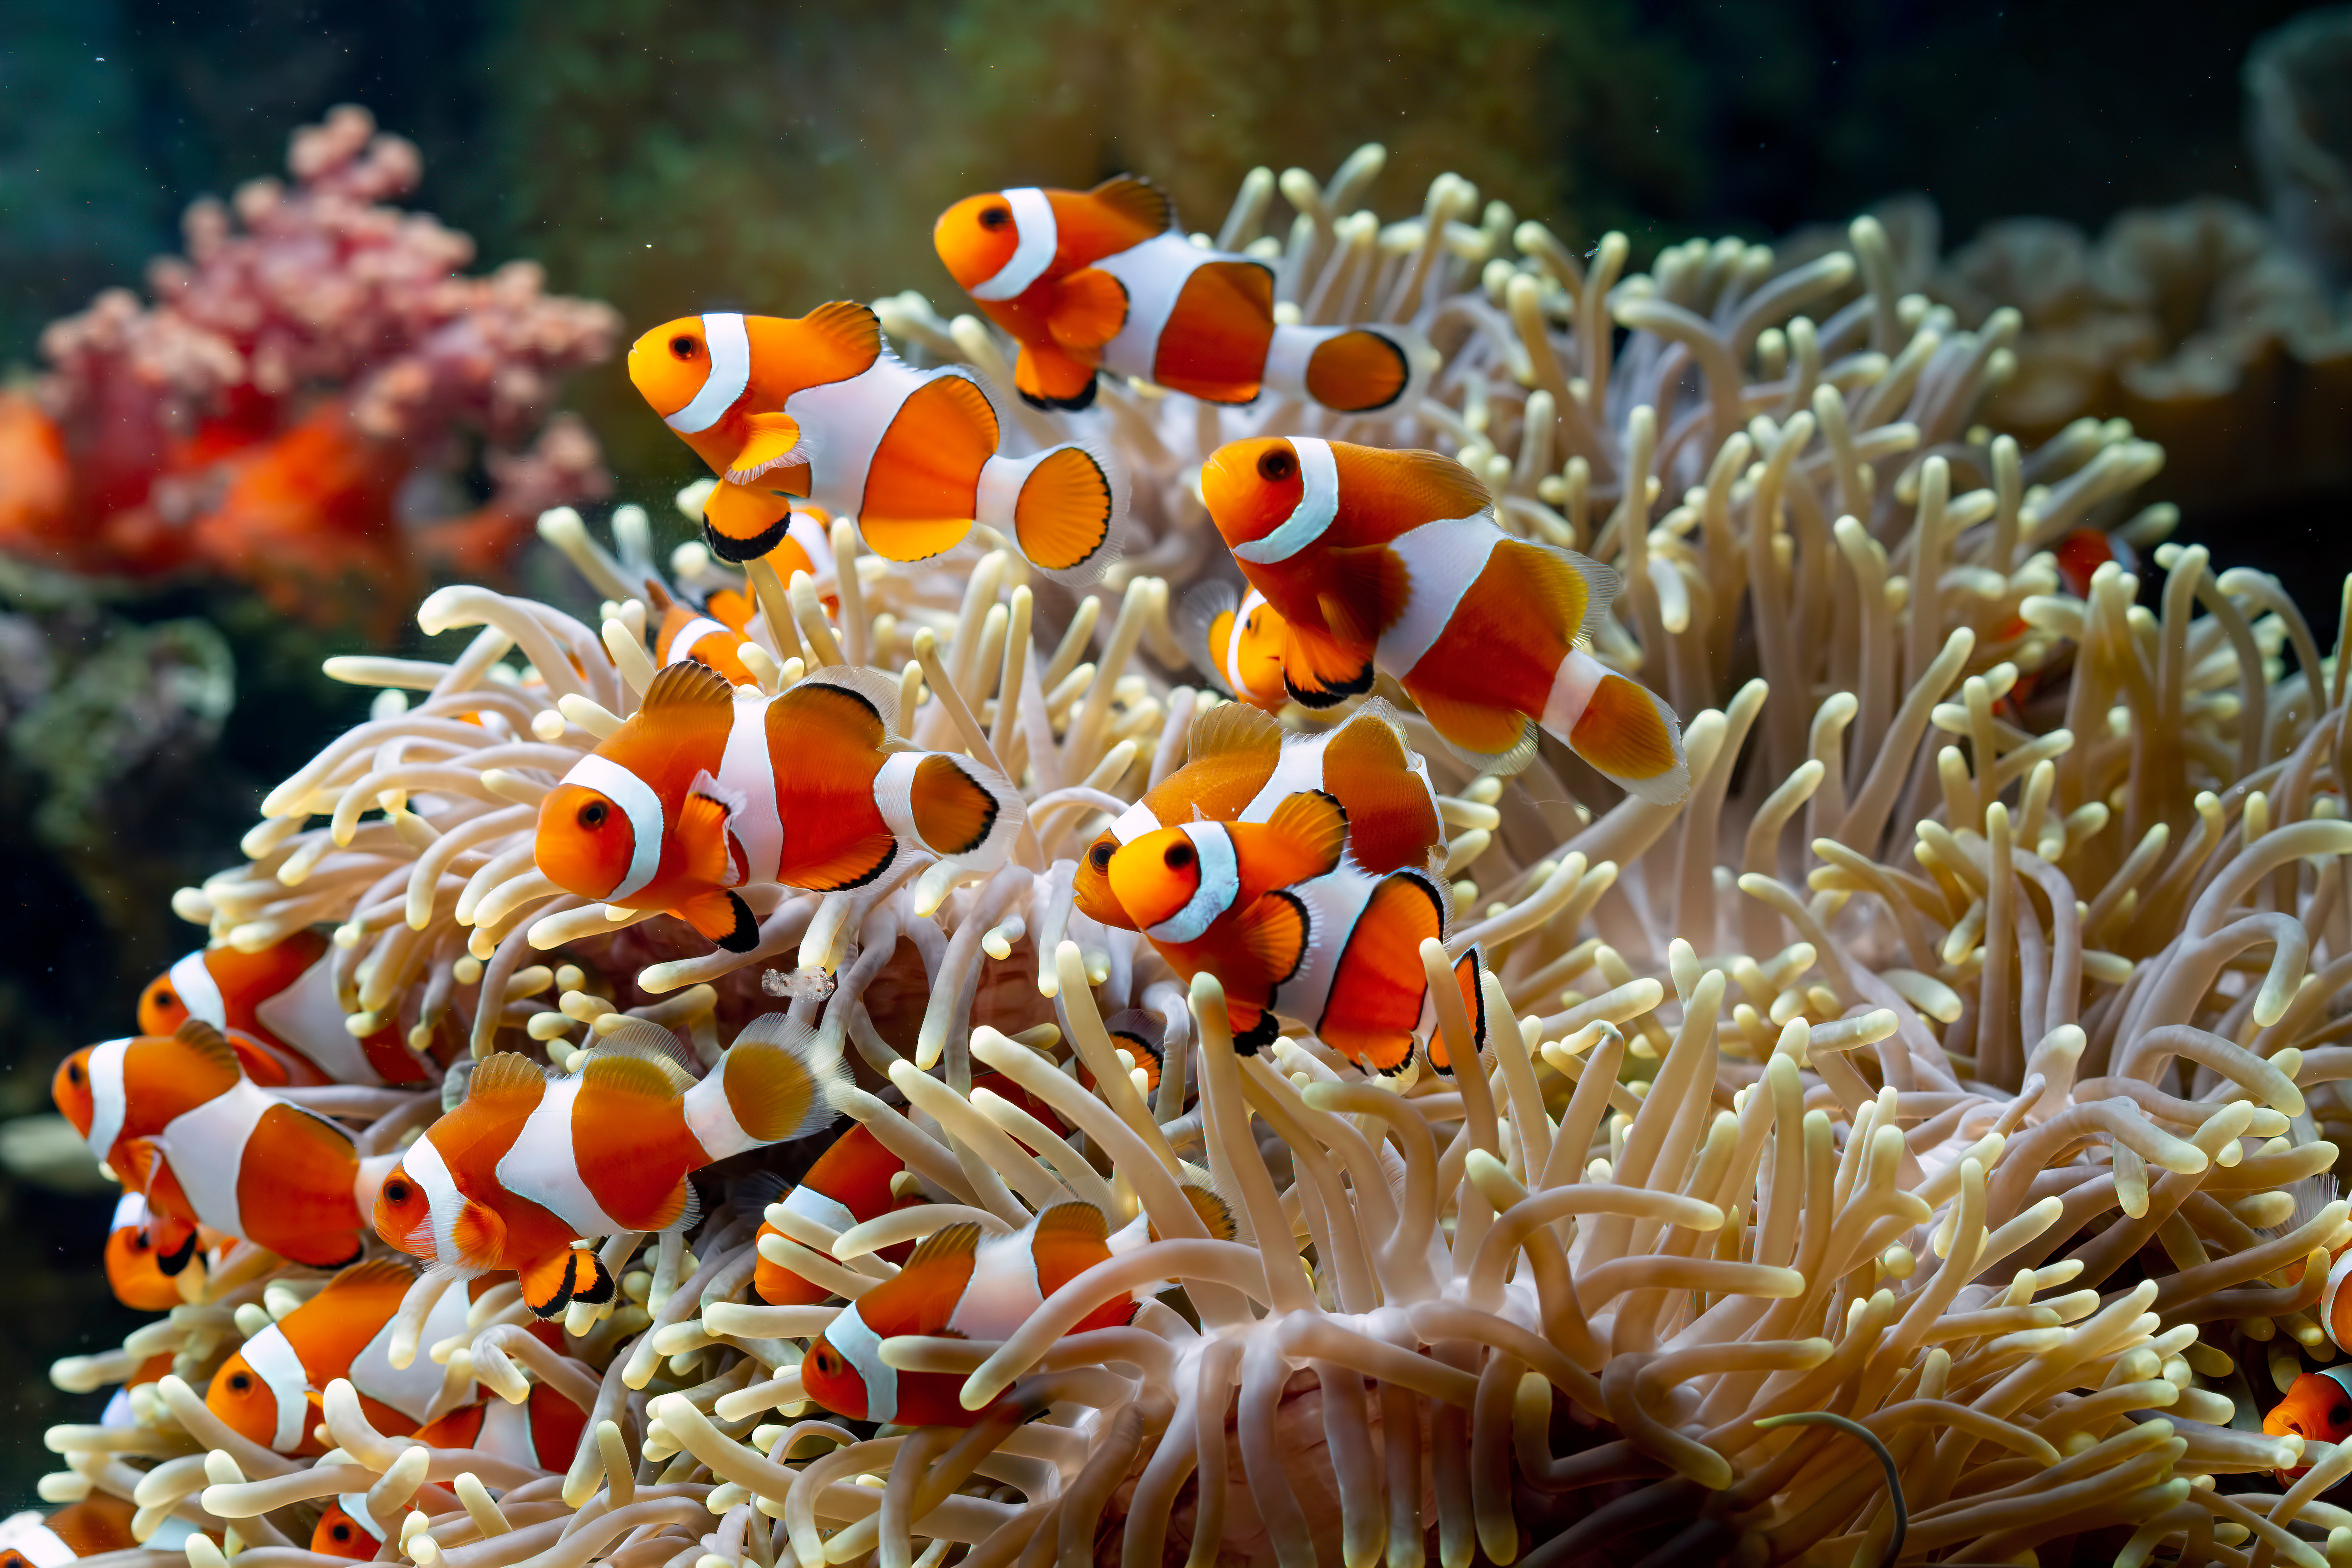 General 5184x3456 fish coral clownfish sea anemones colorful orange sea underwater nature